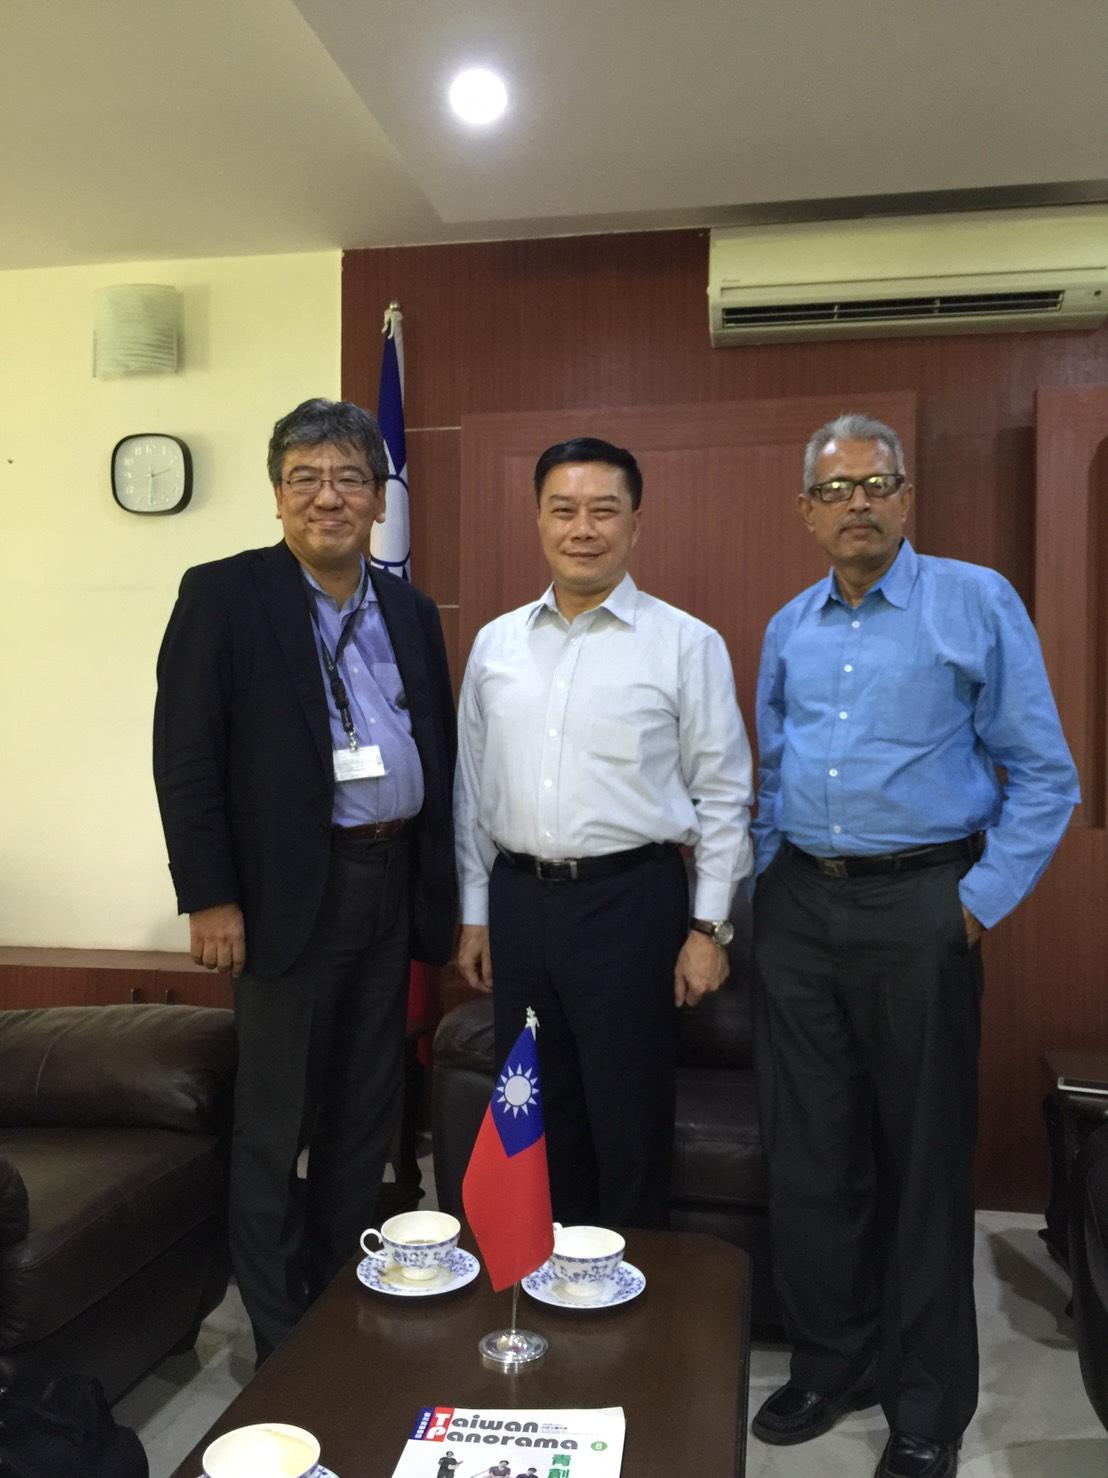 Mr. Isao Tsujita (L), Director General Charles Li (Center), Mr. O. K. Kishore (R)
